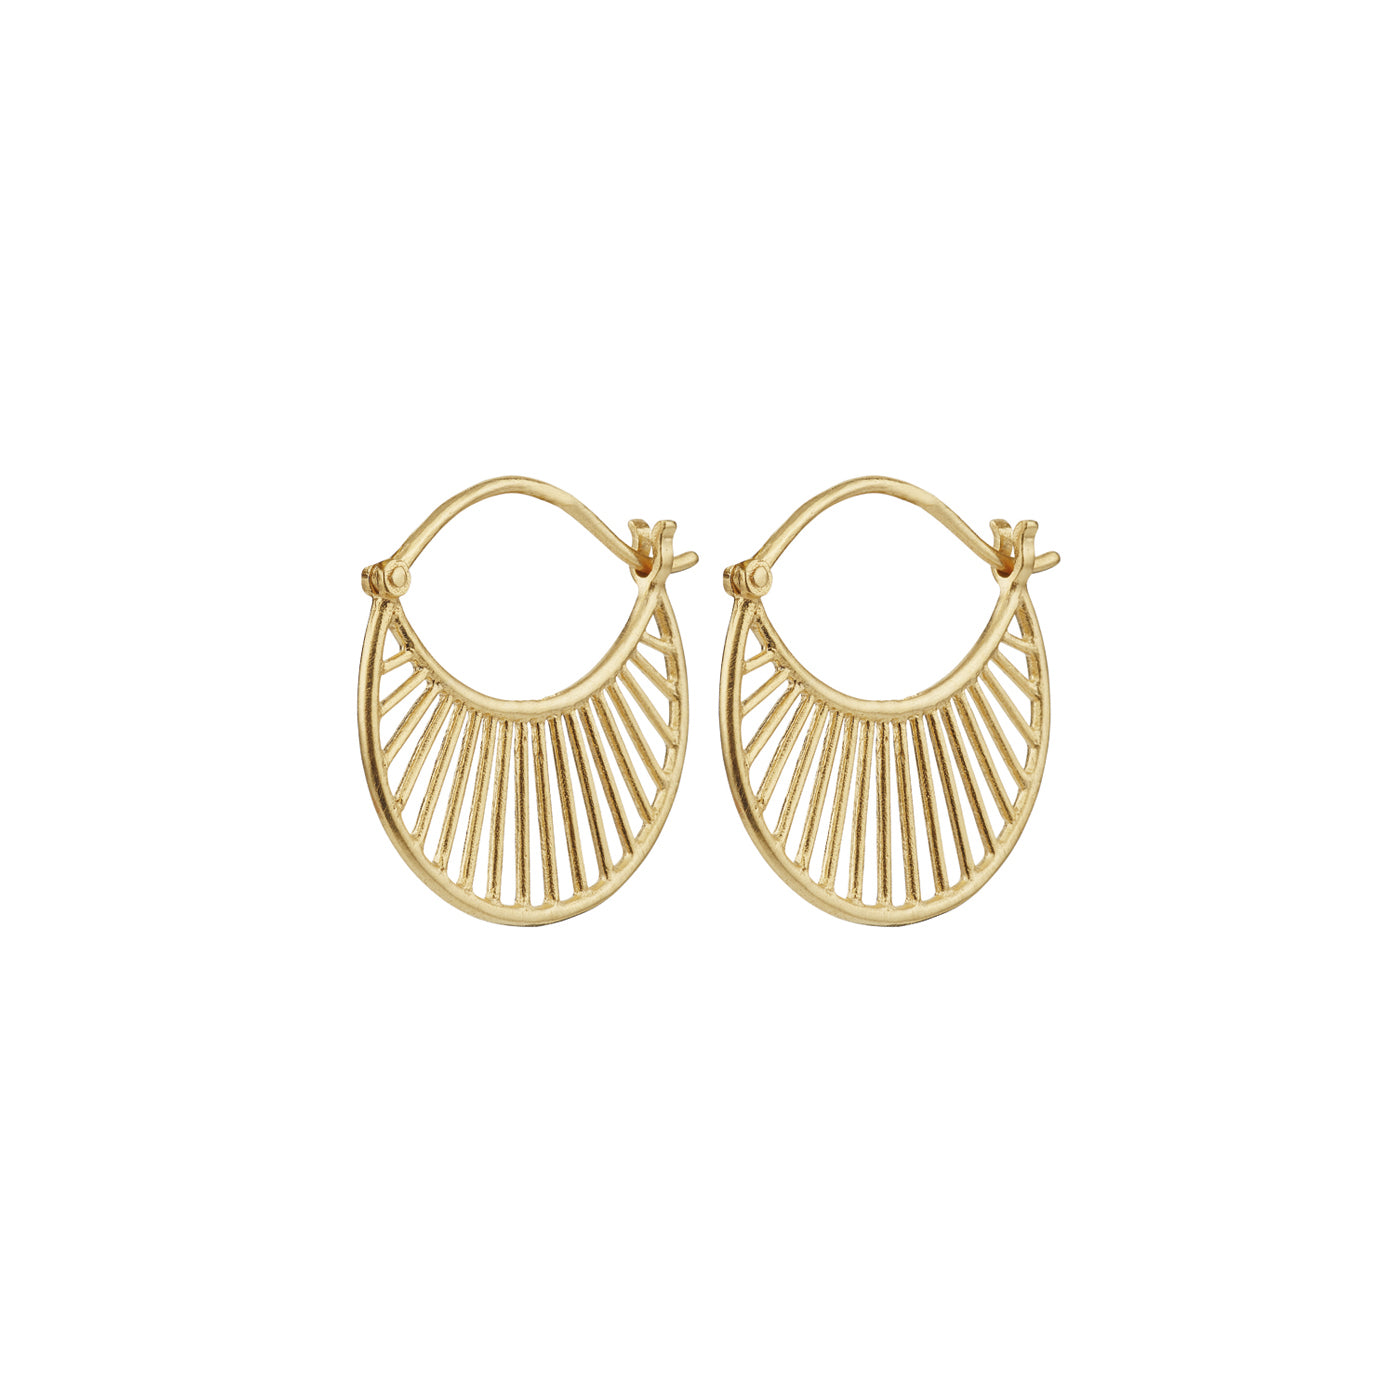 Pernille Corydon Daylight Earrings Gold Plated